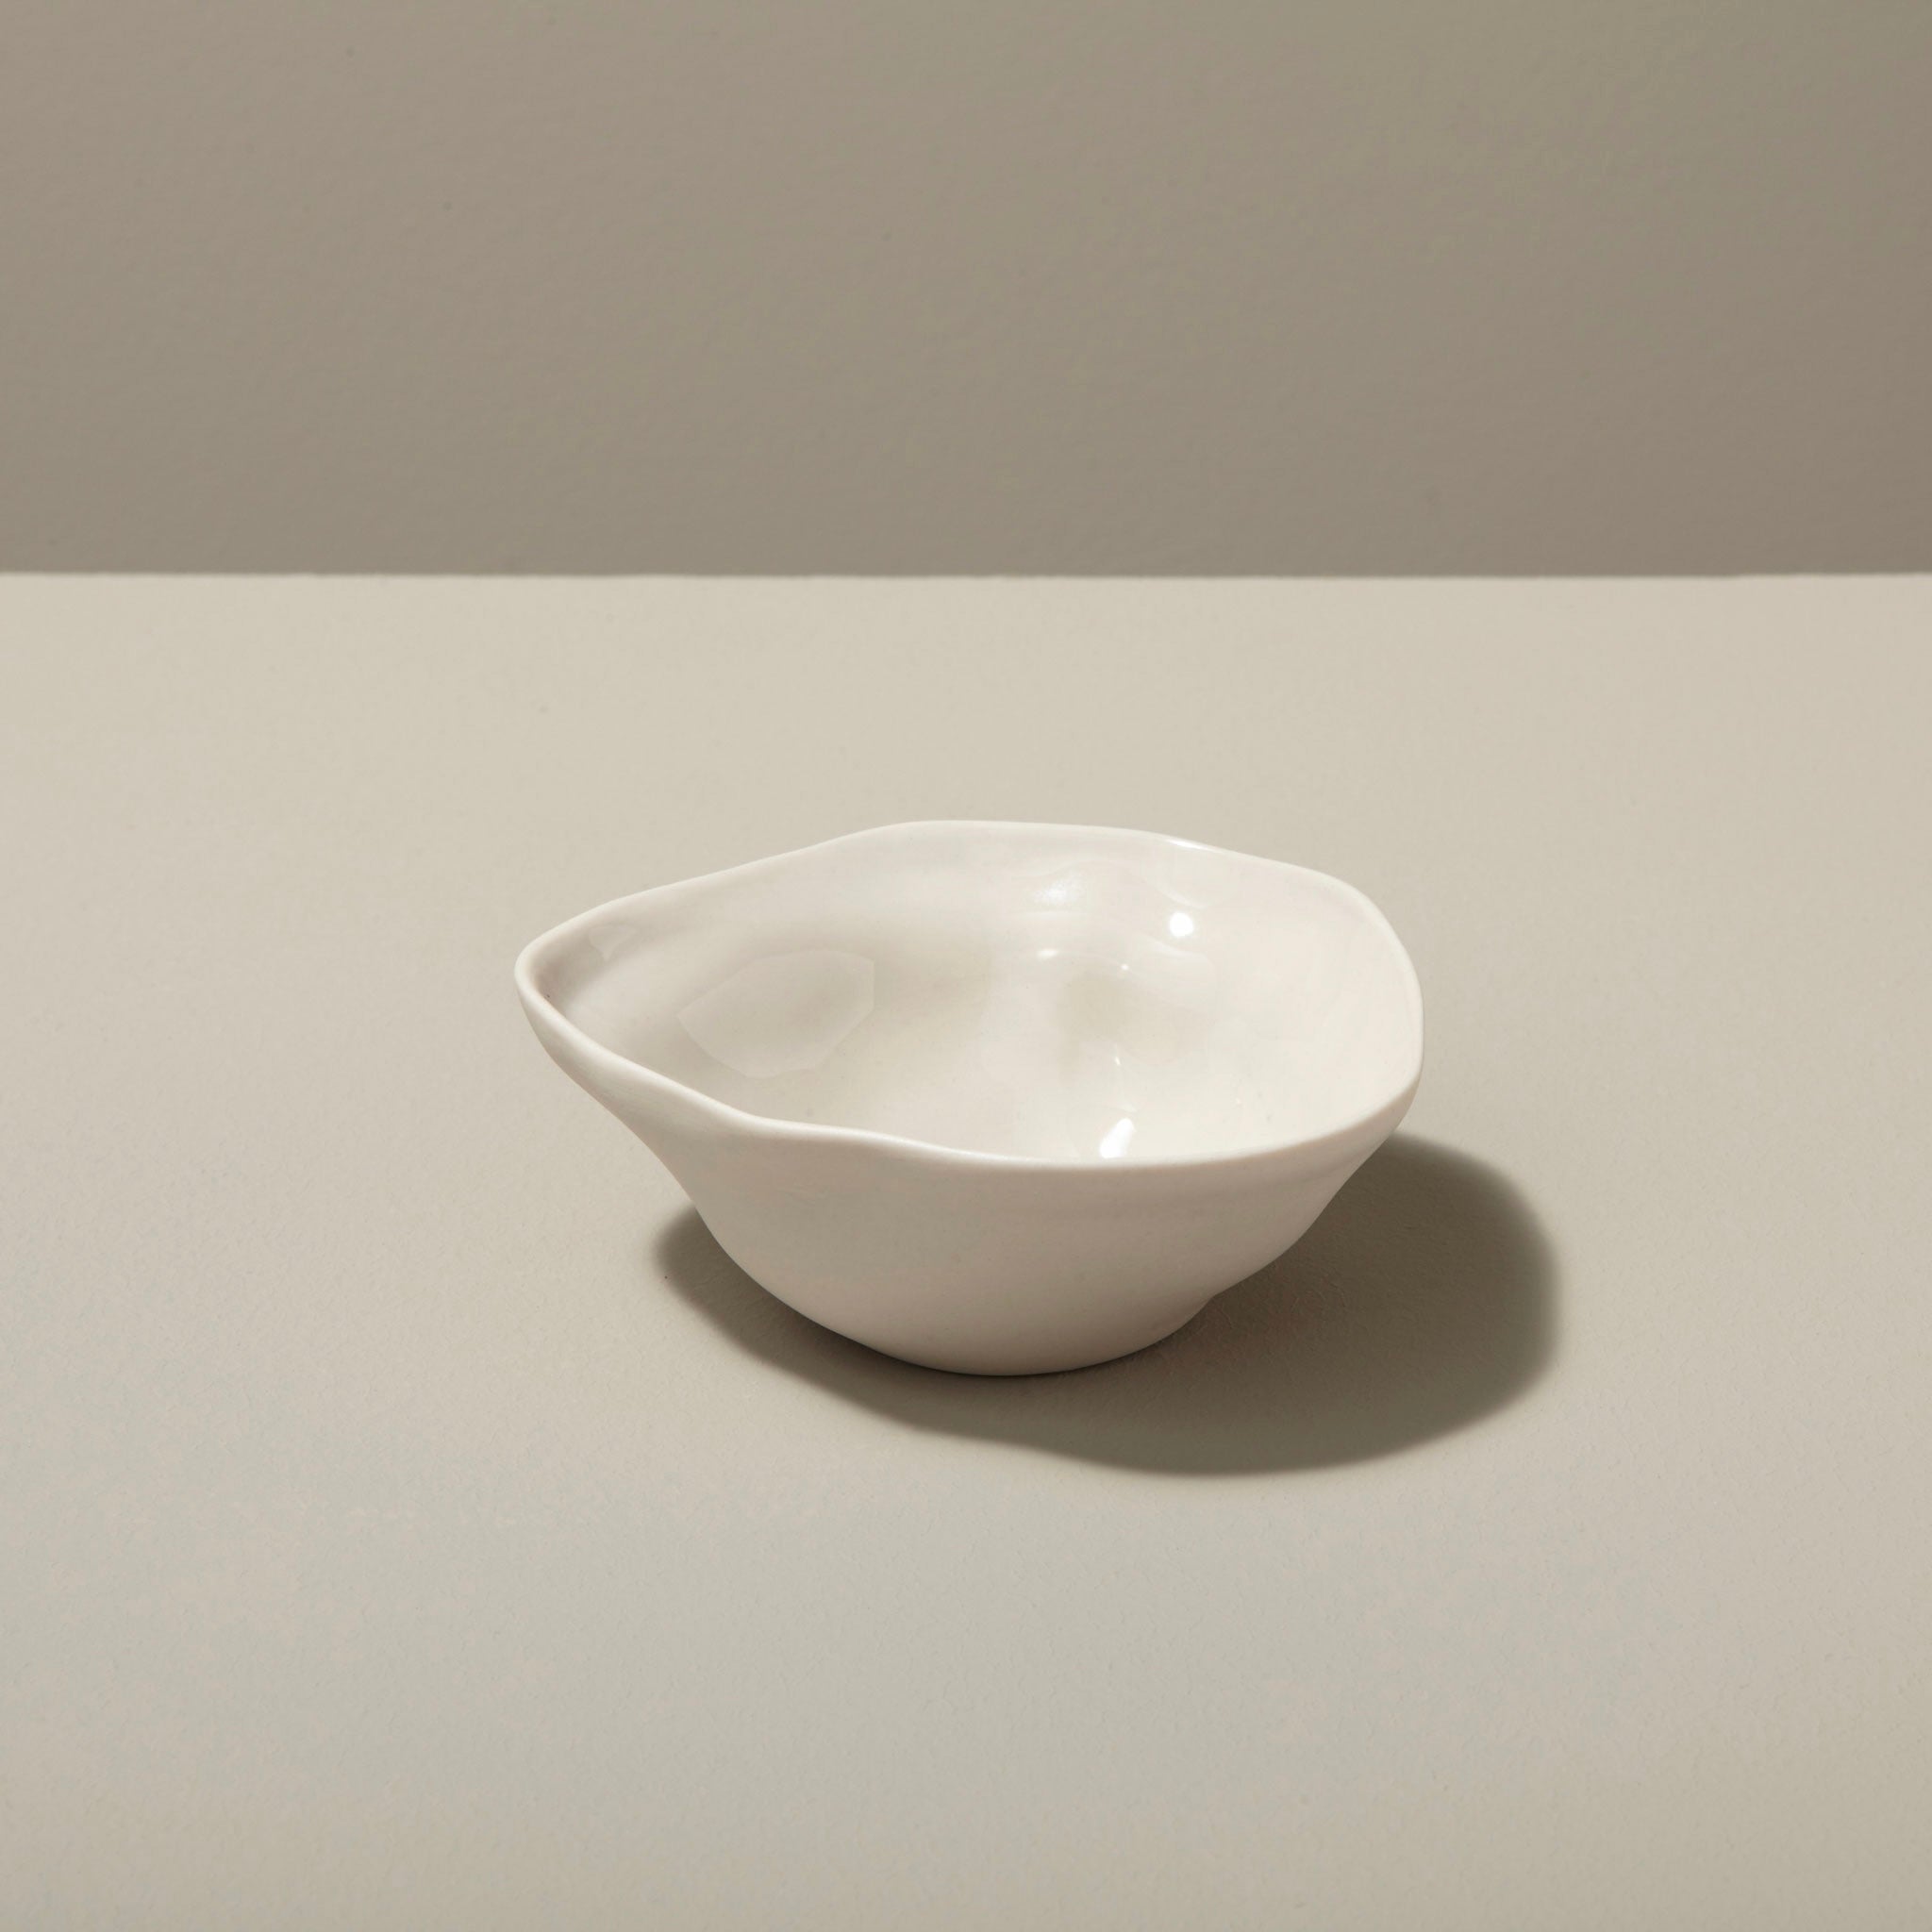 Pearl Stoneware Serving Bowl - 3 sizes